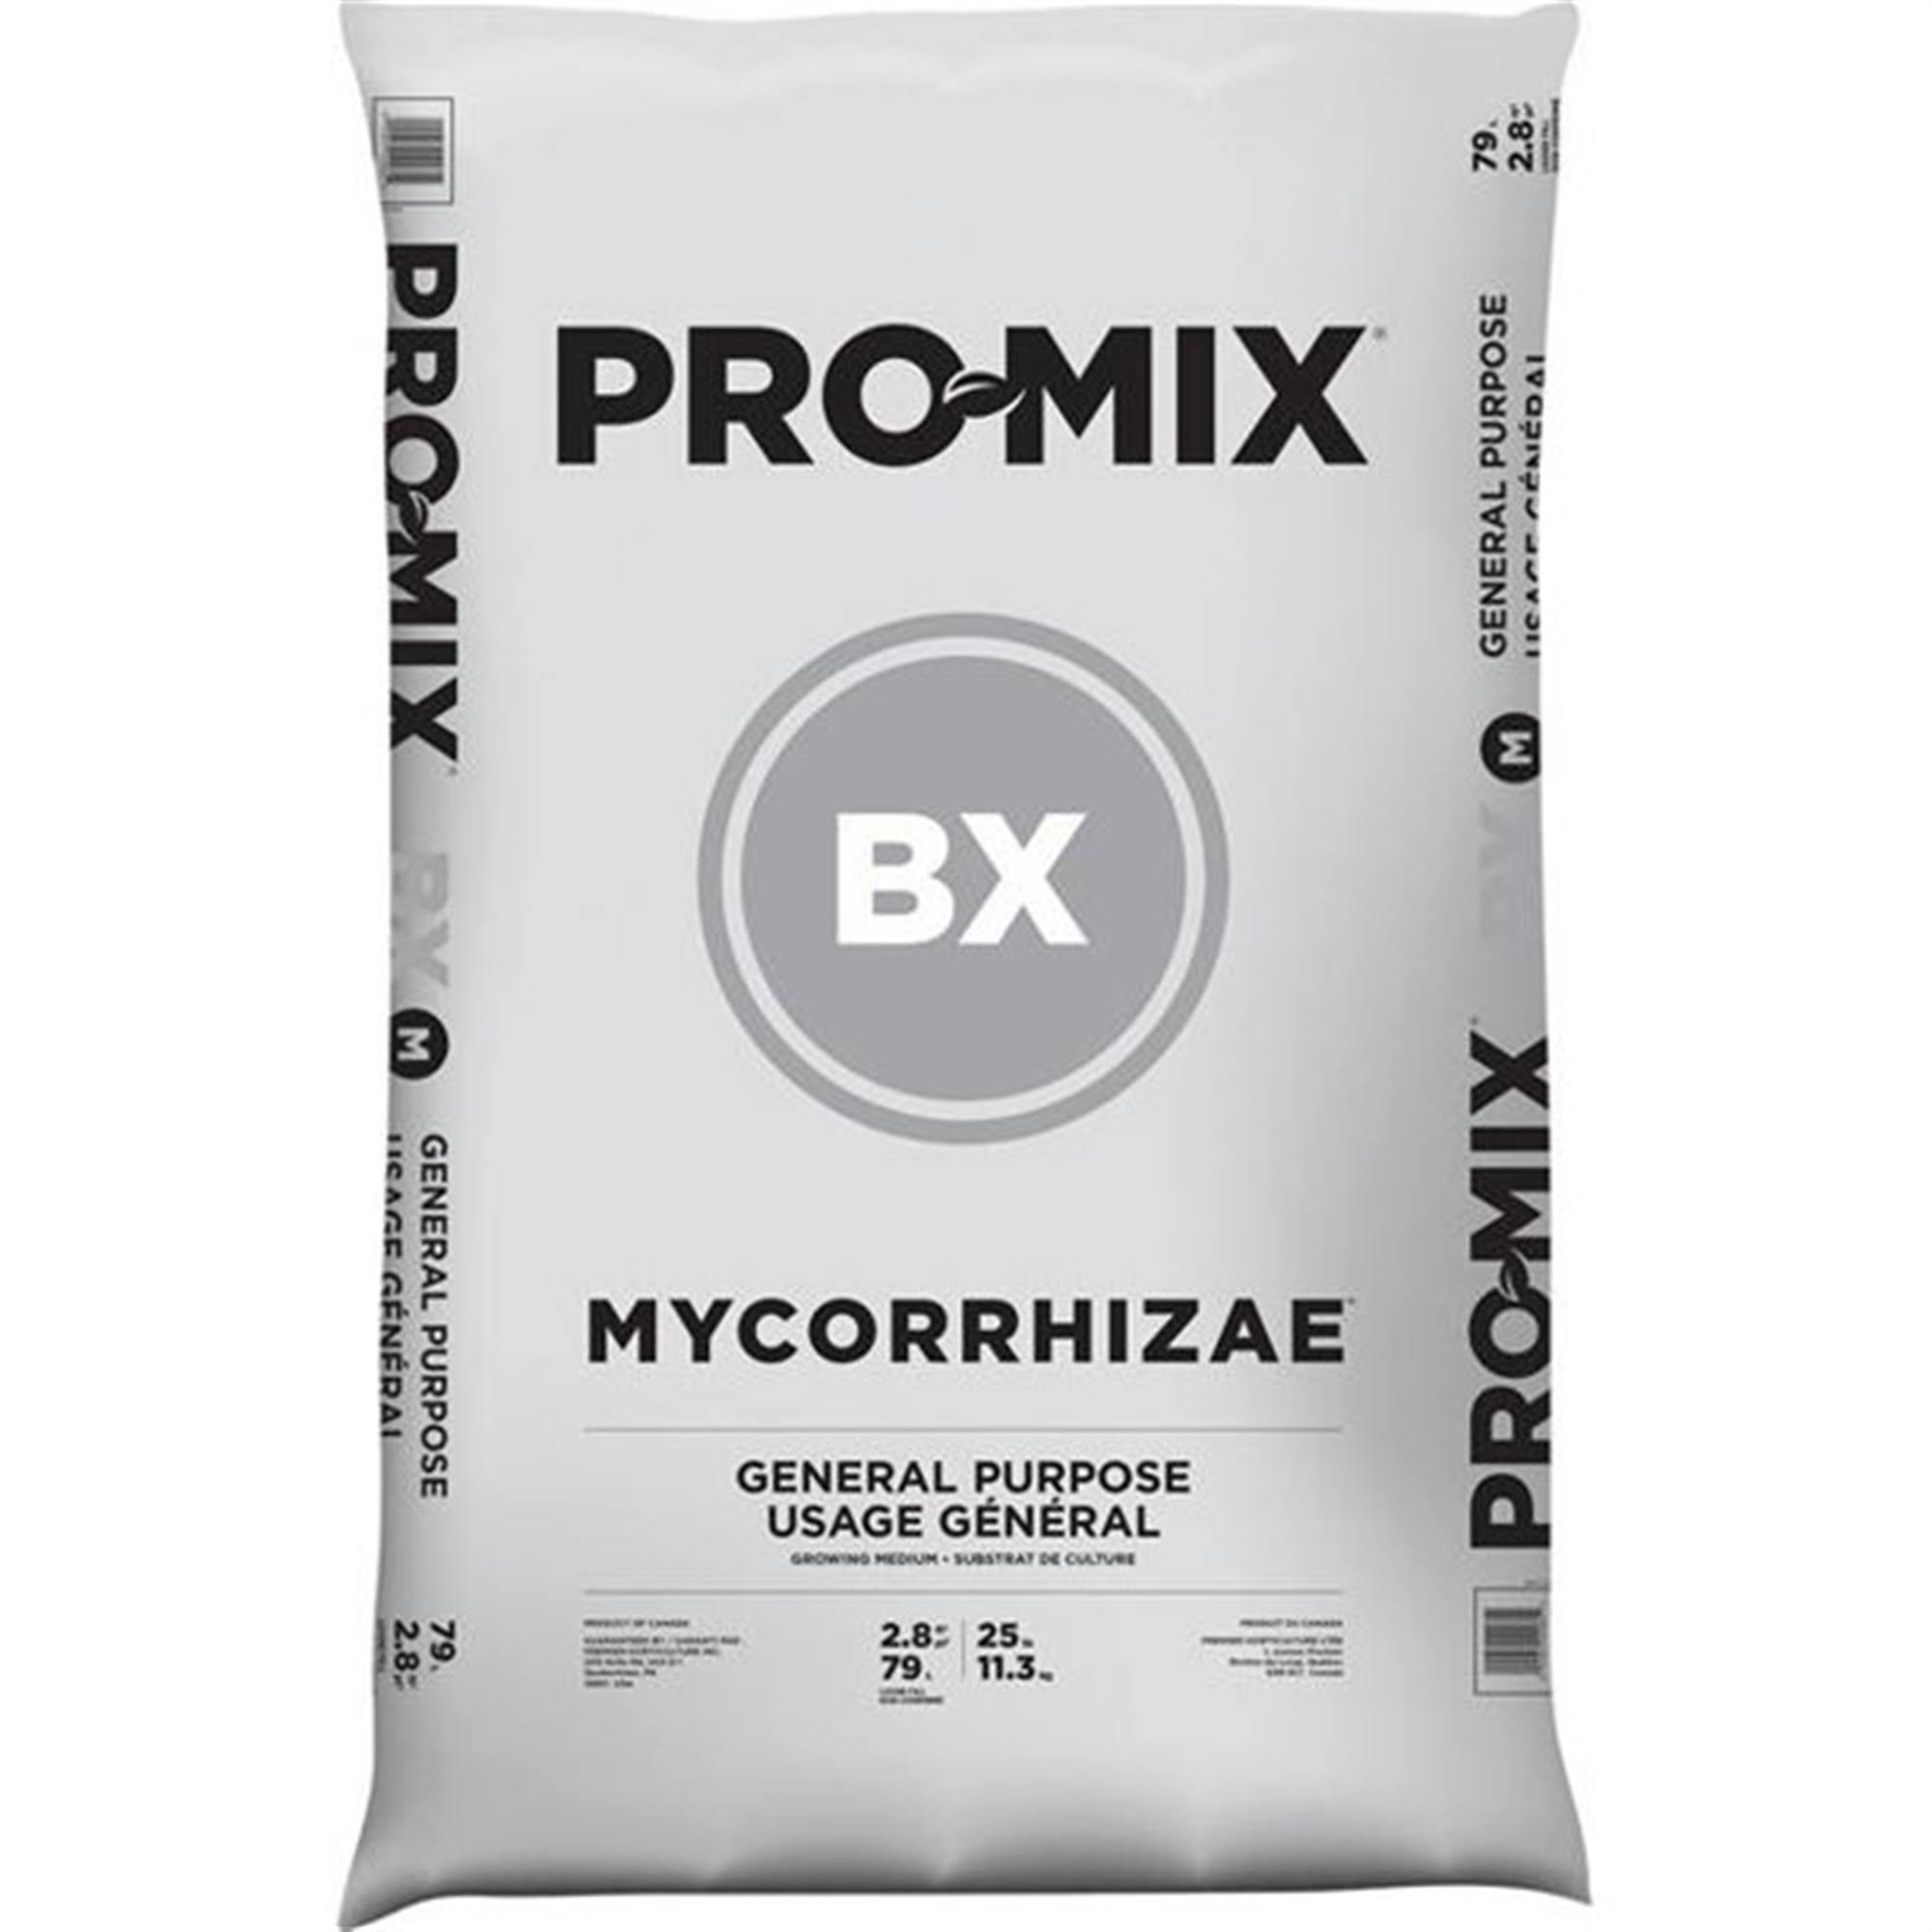 Pro-Mix BX Mycorrhizae 2.8 Cu ft (57/pallet)